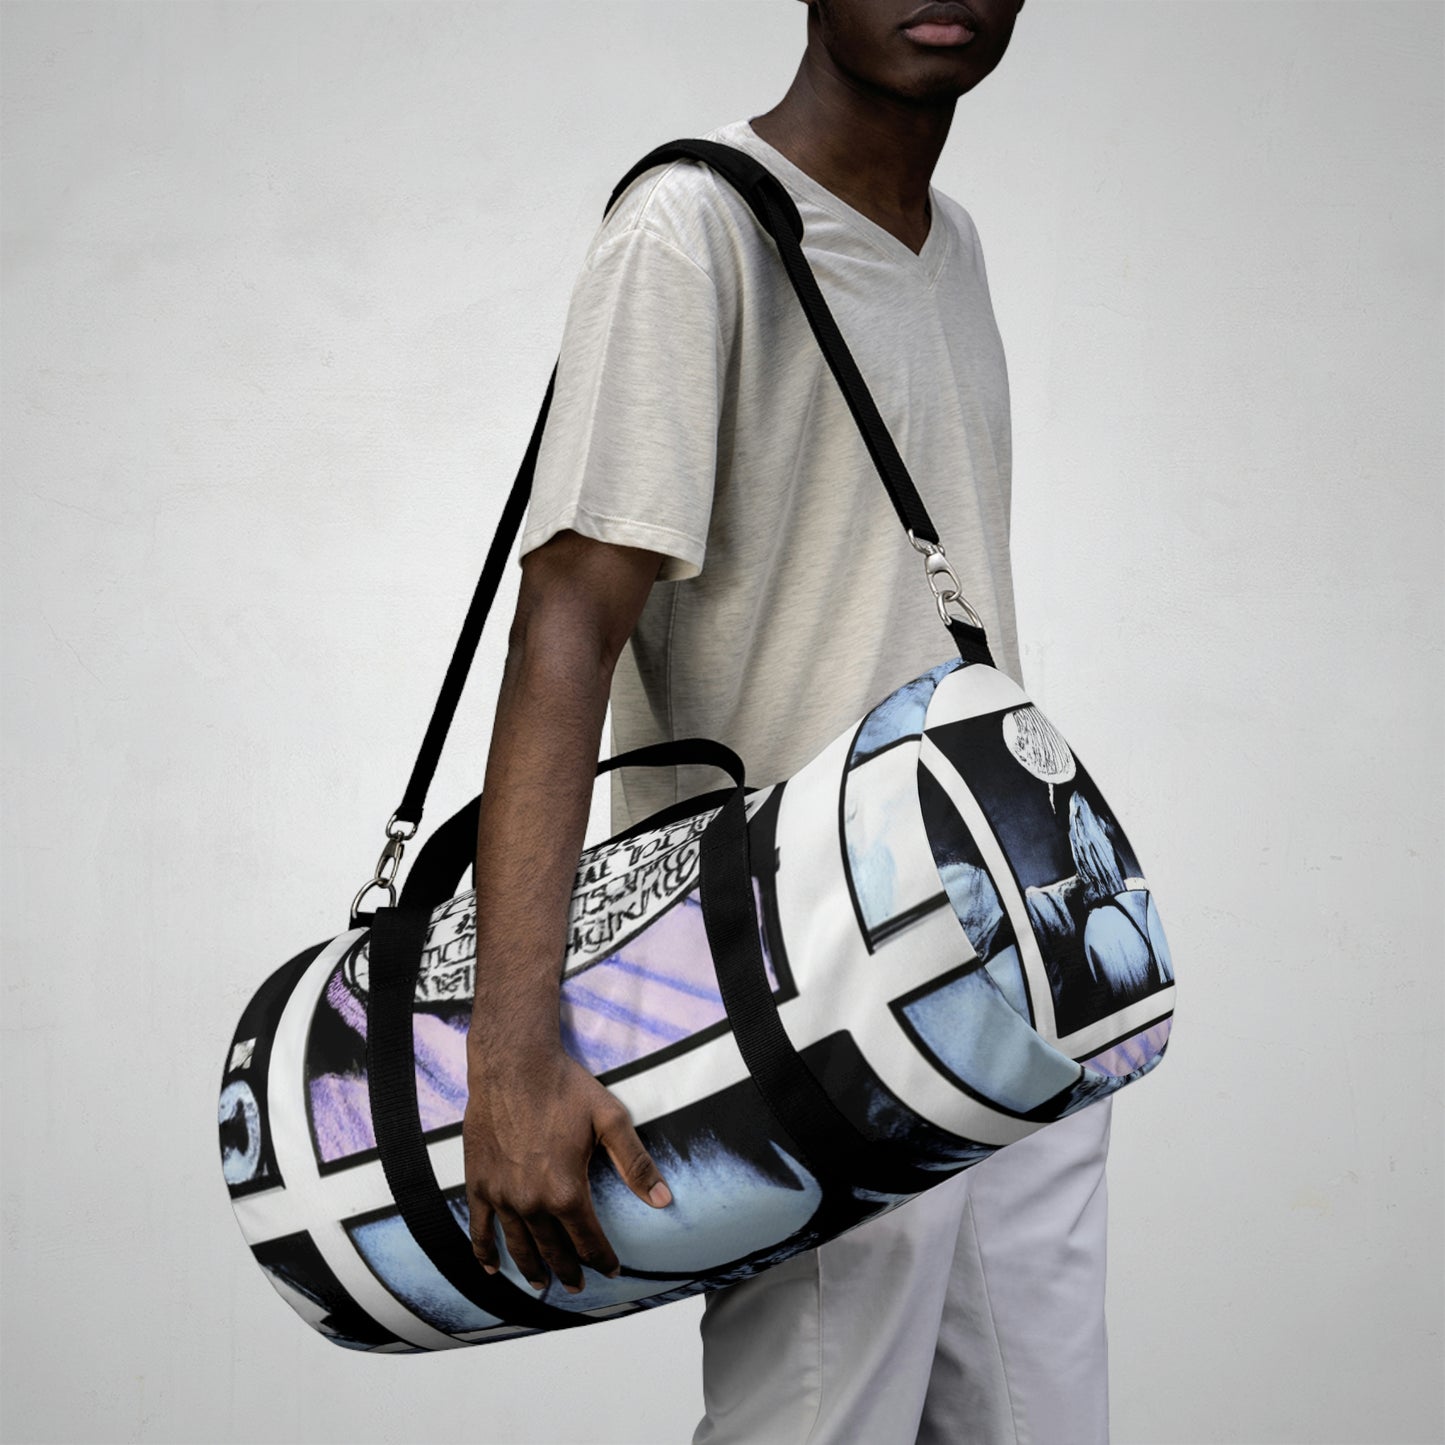 Silas Kingsly, Purveyor of Luxury Duffle Bags - Comic Book Duffel Bag